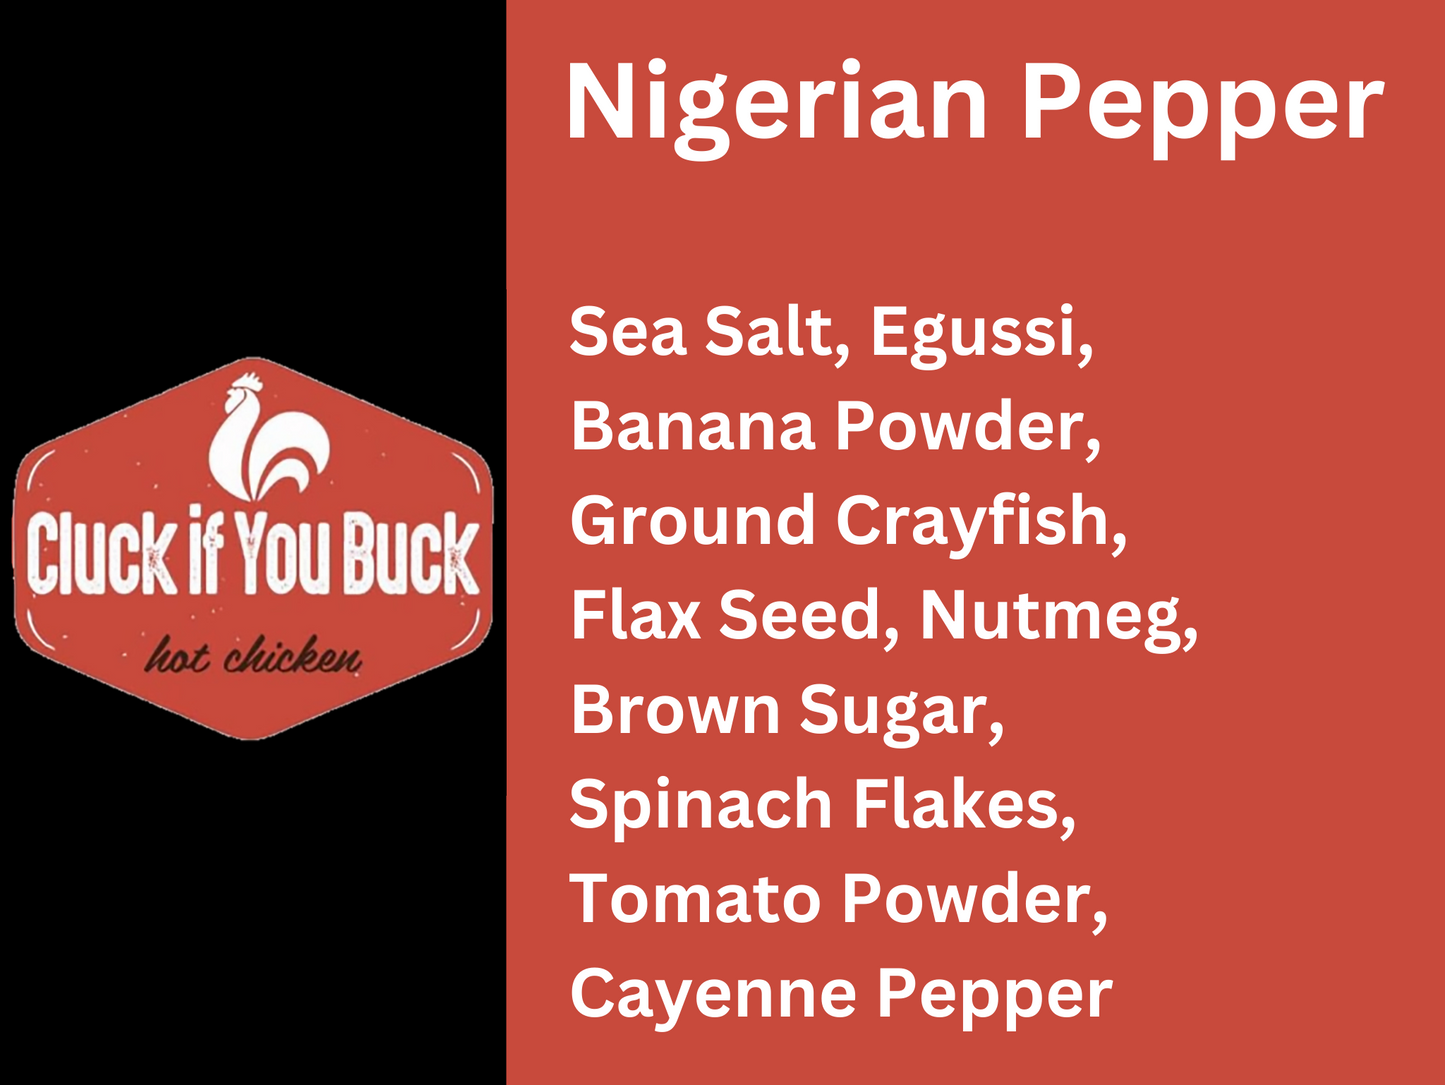 Cluck if You Buck - Variety Pack - Sweet Heat Sea Salt - 36 Pack - Restaurant Bundle